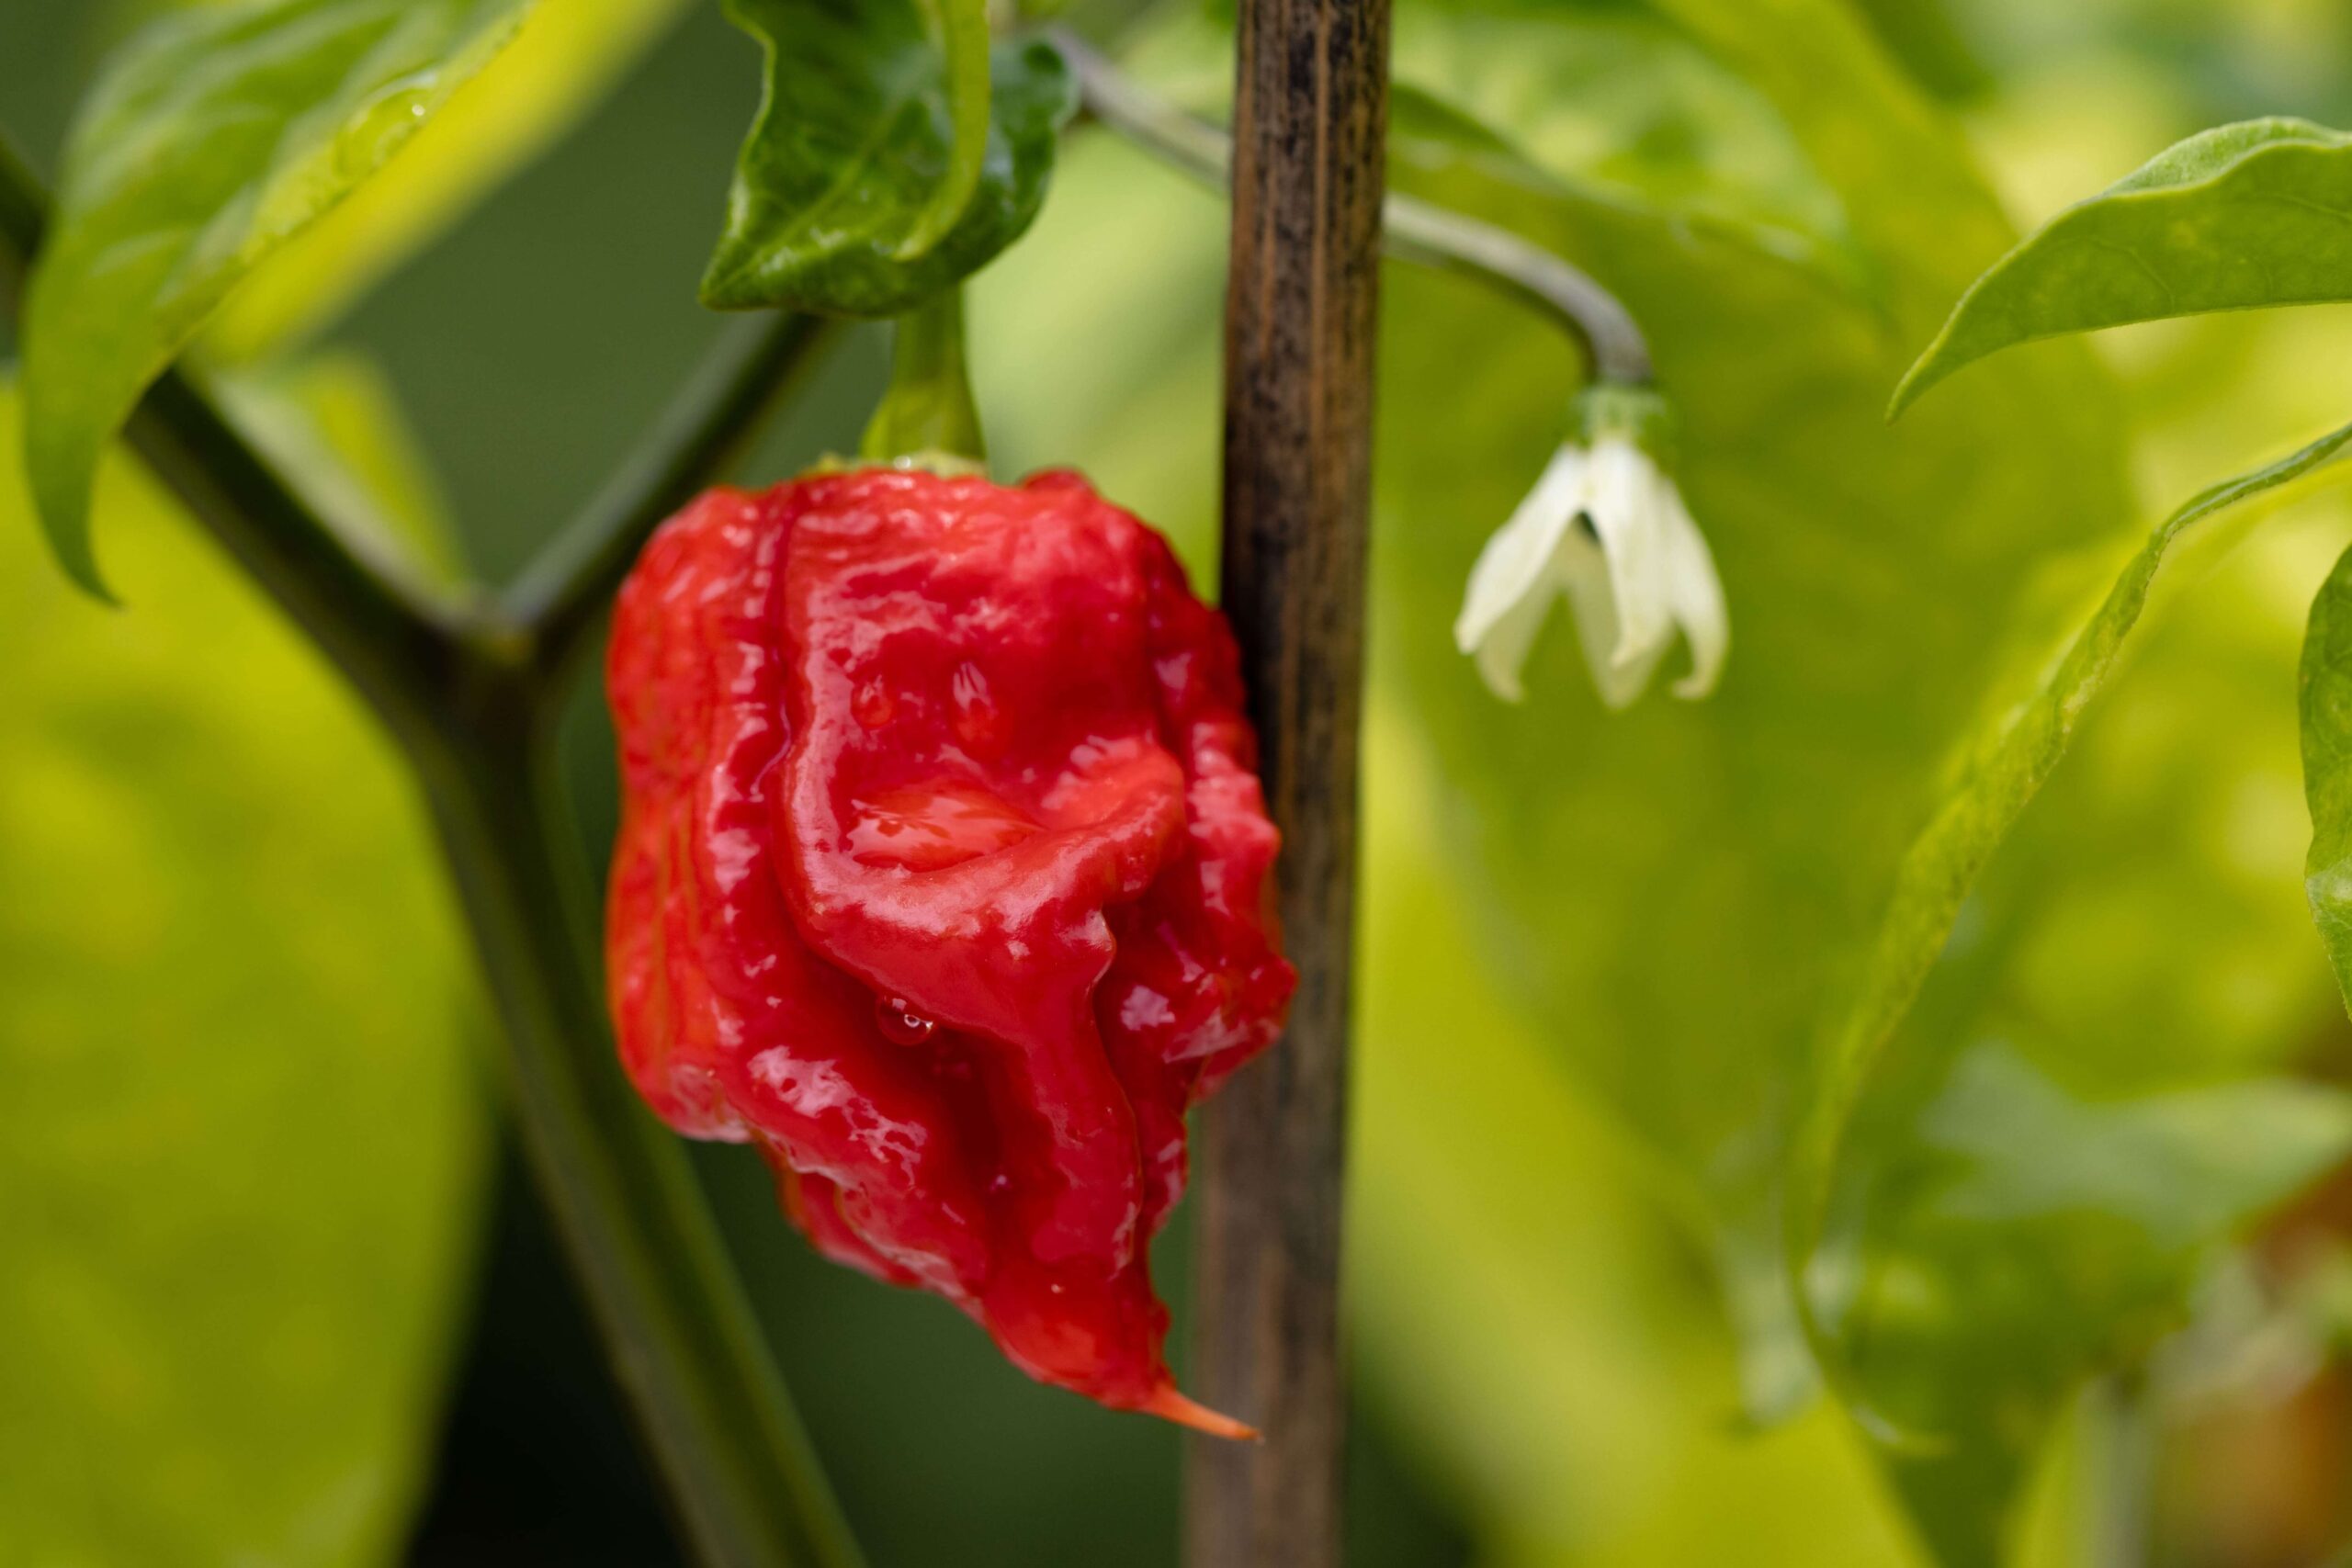 a red, shriveled carolina reaper chili pepper hangs on a bush